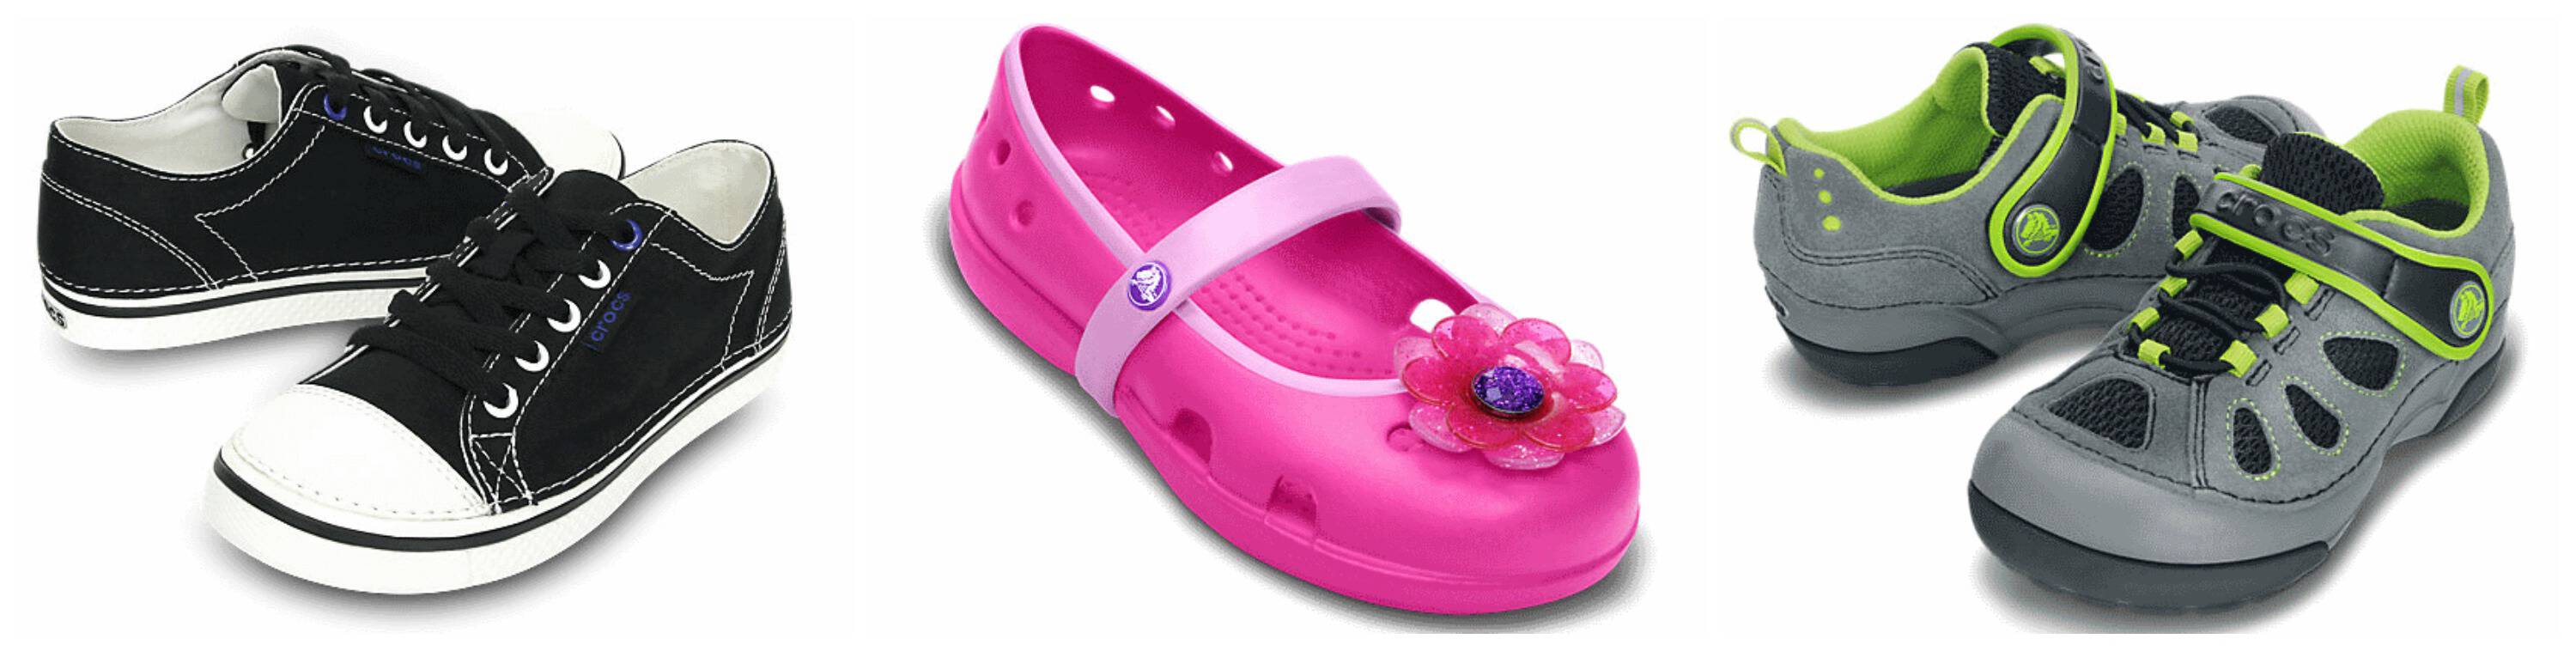 Crocs Kids Shoes